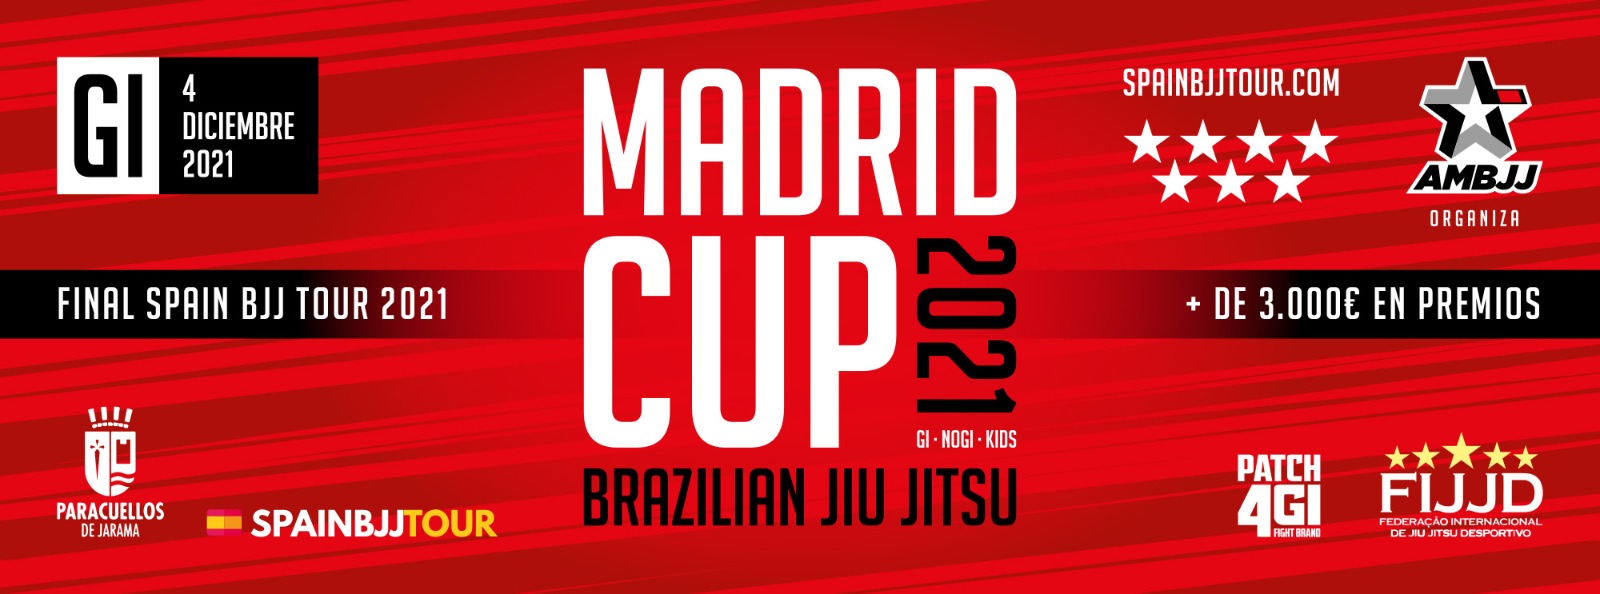 Madrid Cup BJJ Gi 2021